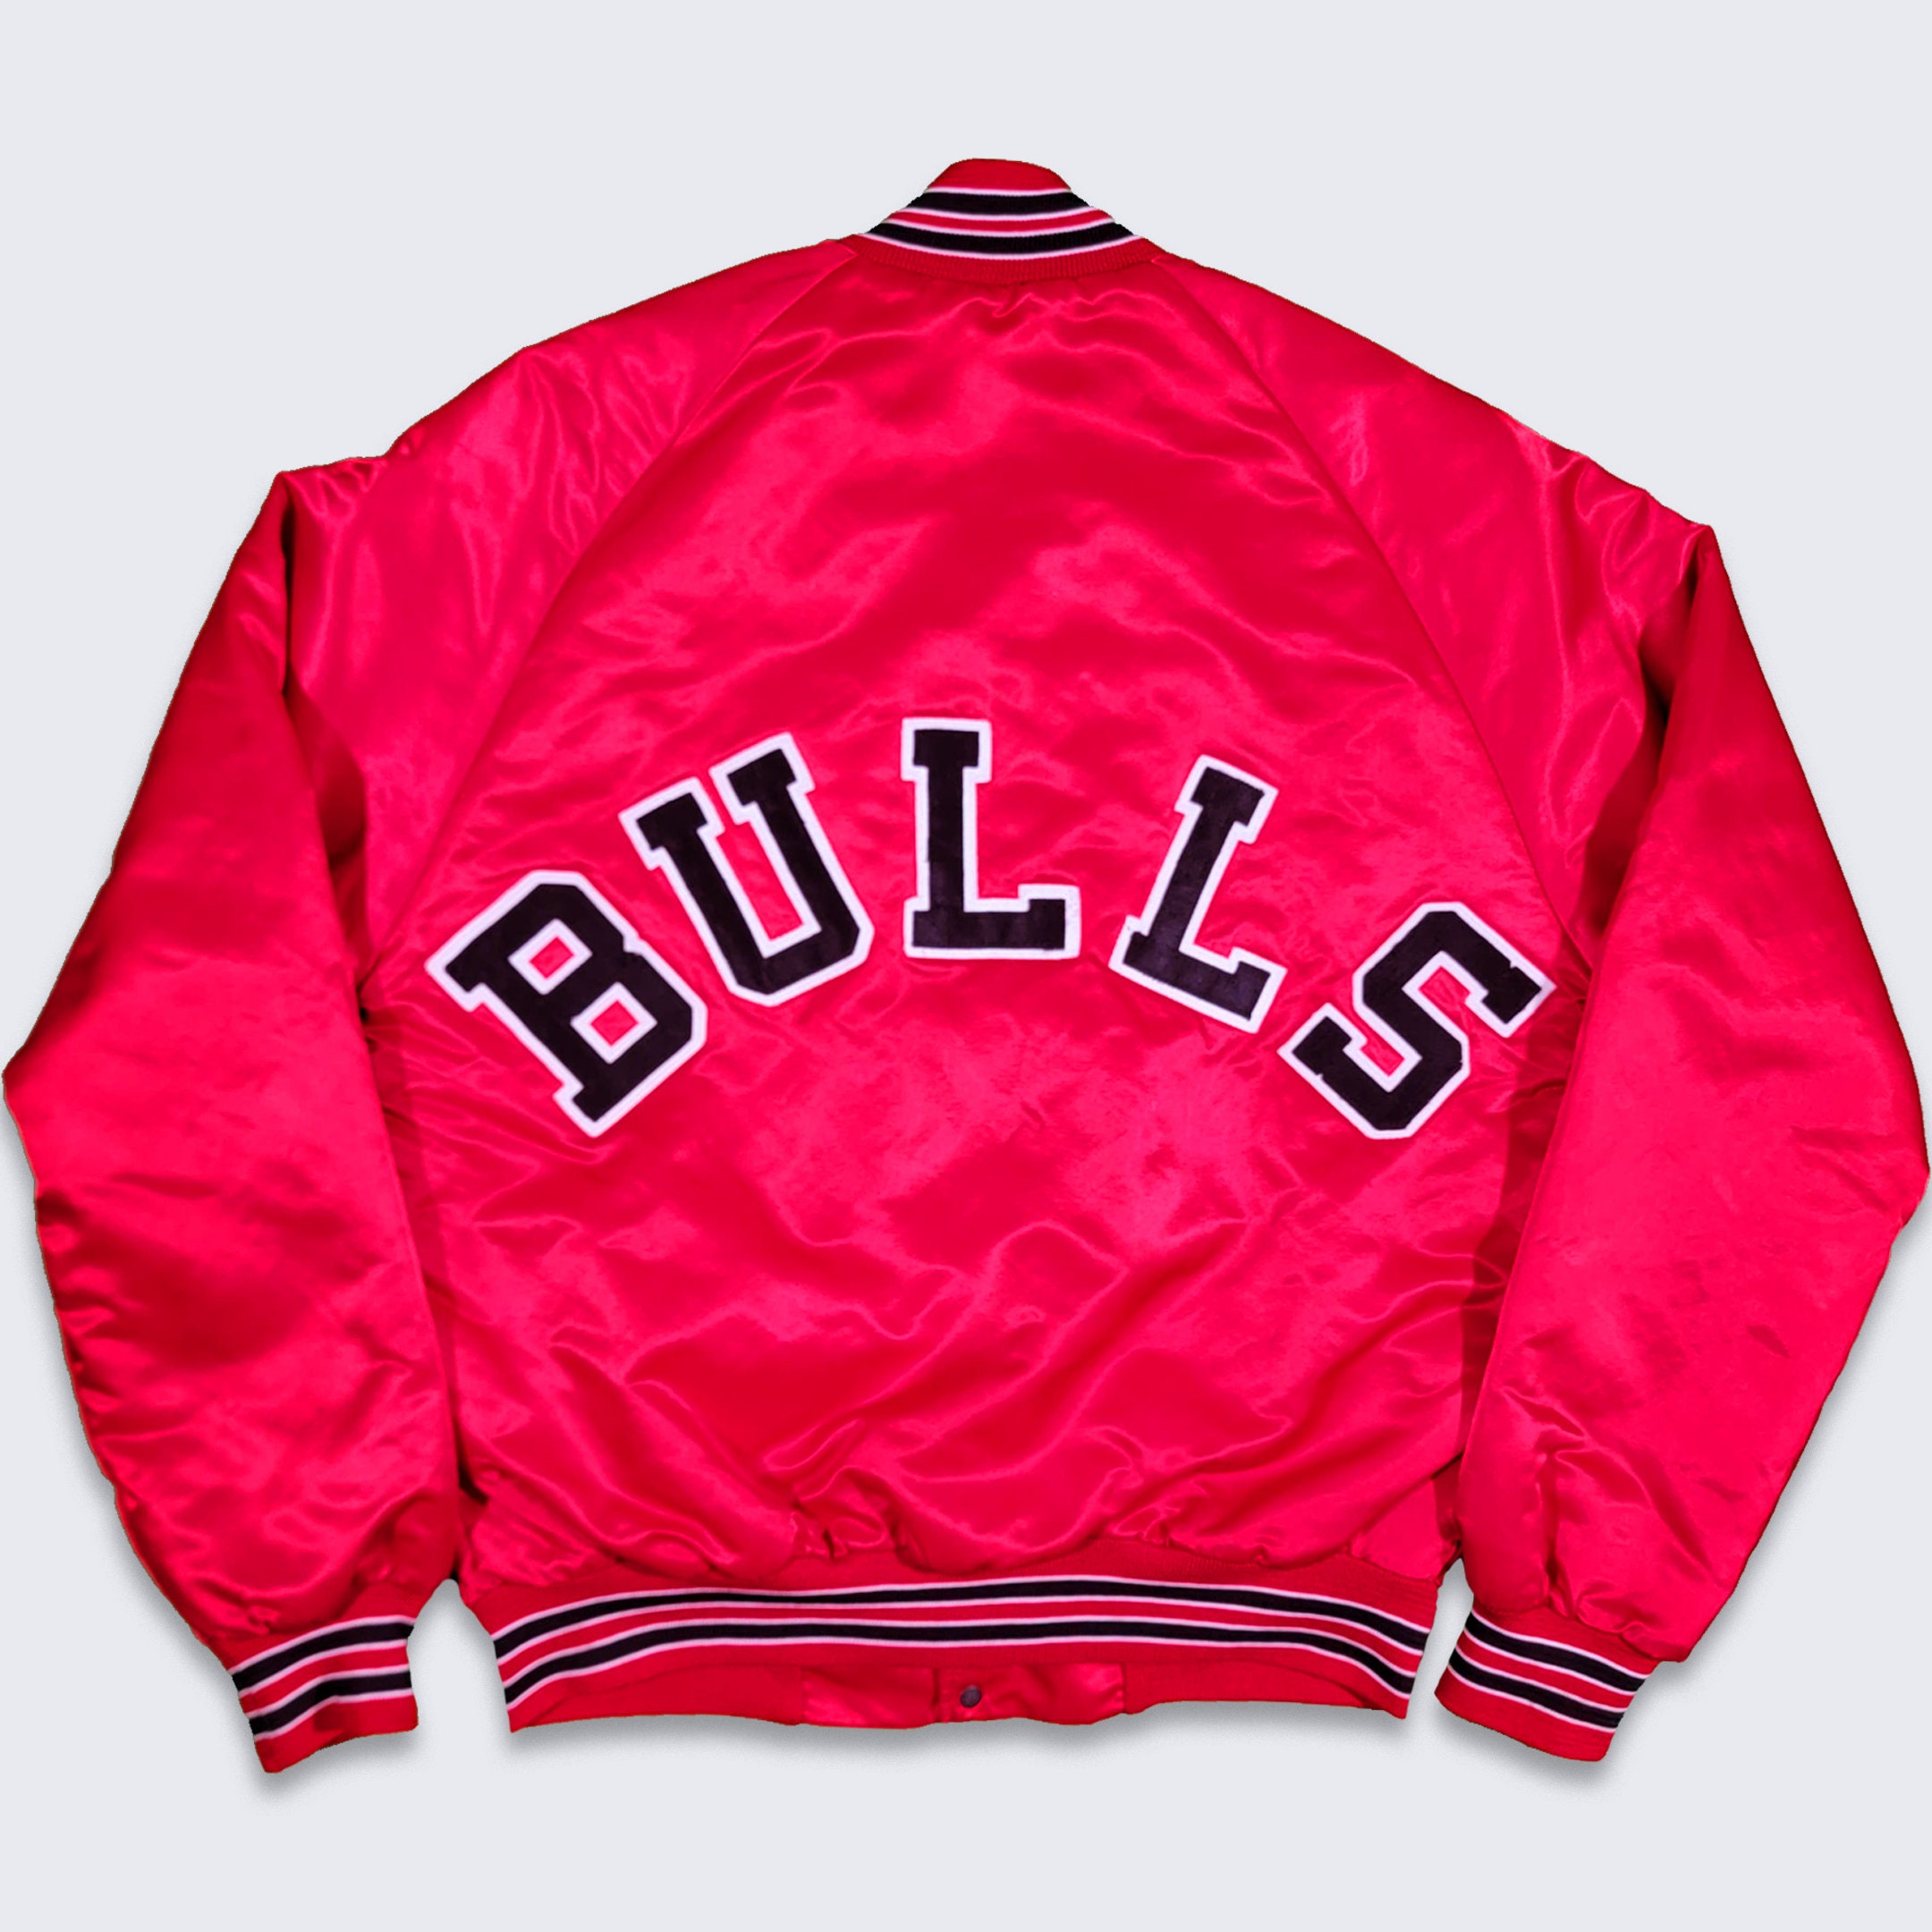 Jackets Creator - Women's Chicago Bulls Satin Varsity Jacket